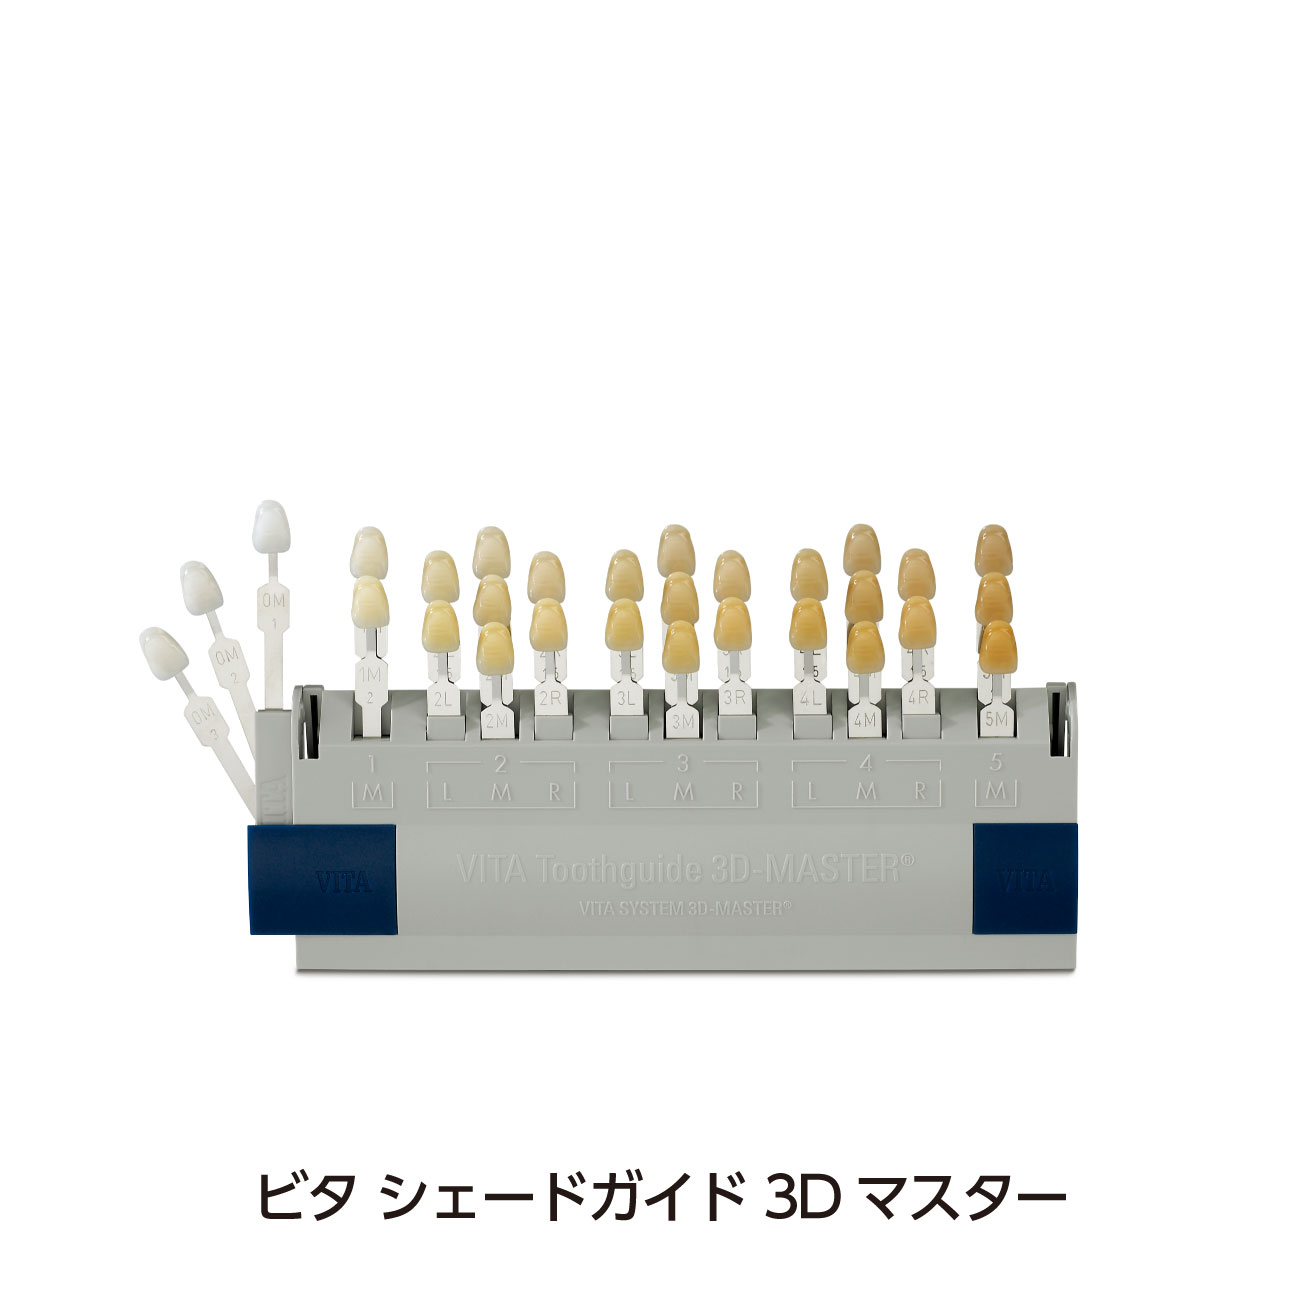 TopSeller 歯シェードガイド 色見本 ホワイトニング用 3D 歯列模型 歯列モデル 20色 20段階 収納ケース付き